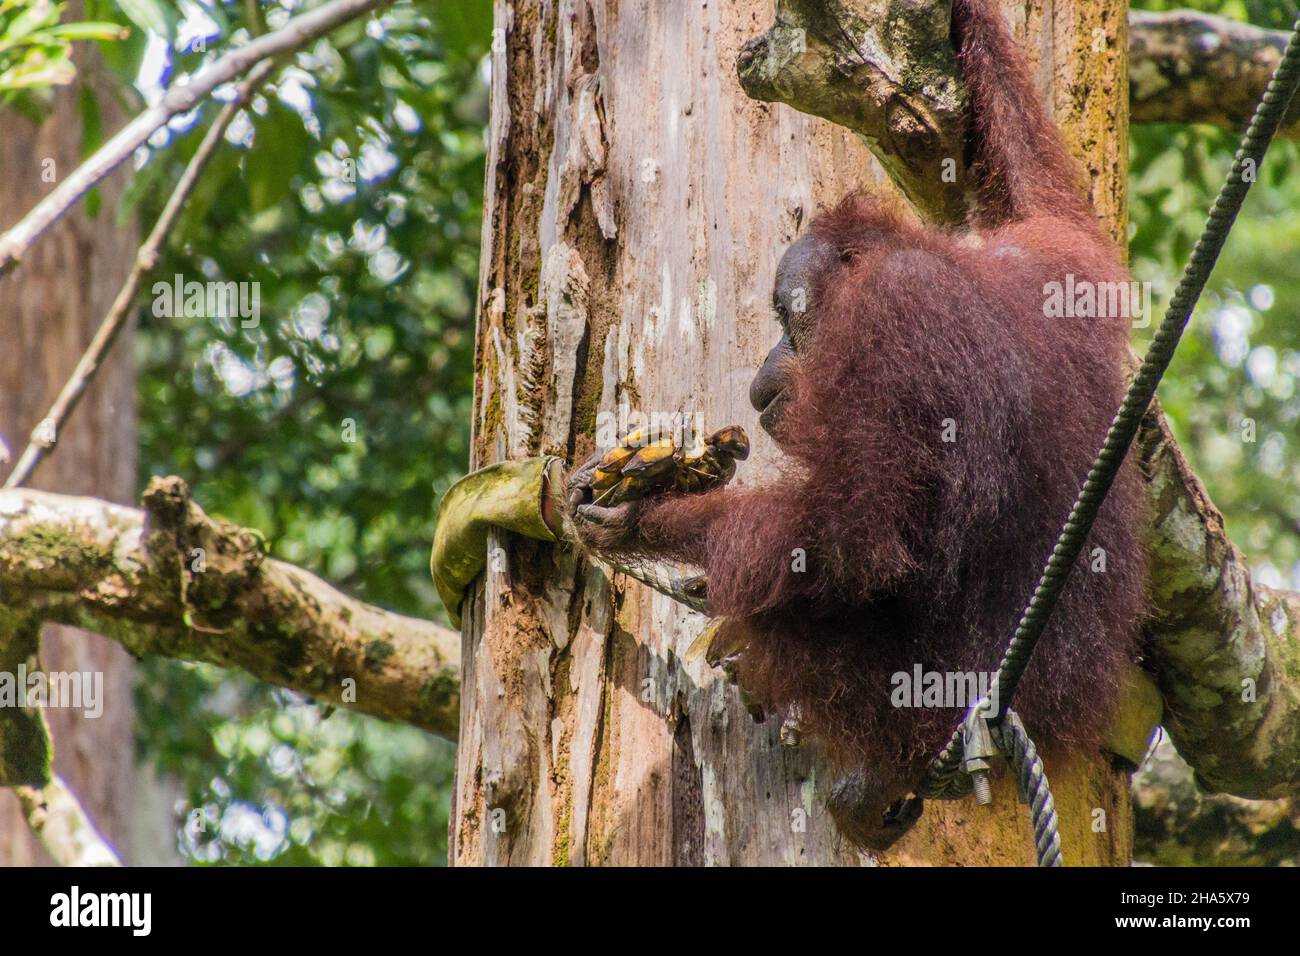 Bornean orangutan Pongo pygmaeus eating bananas in Sepilok Orangutan Rehabilitation Centre, Borneo island, Malaysia Stock Photo